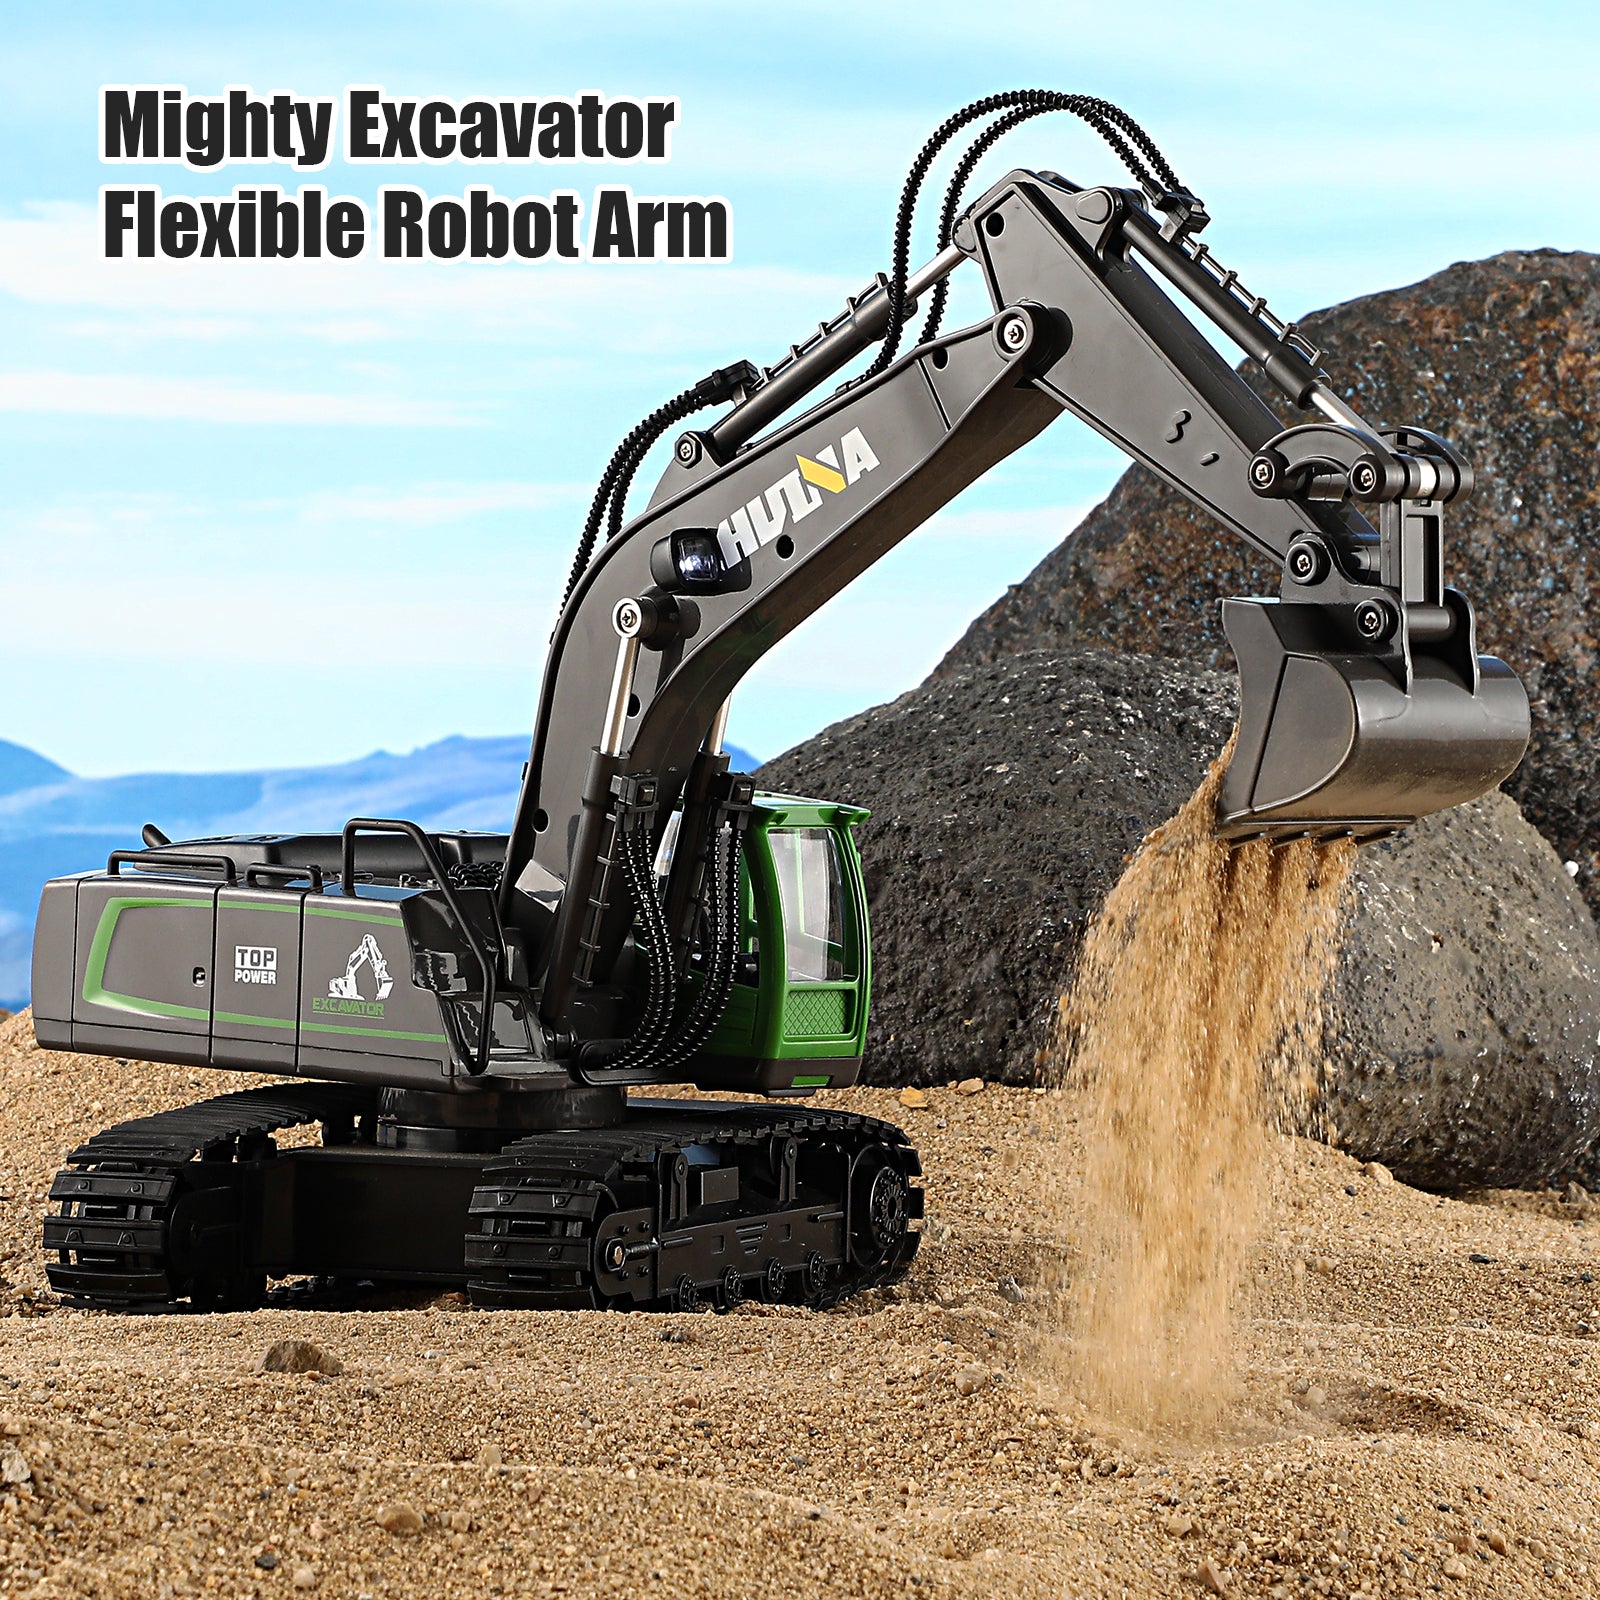 Huina 1558 1:18 Remote Control Semi-alloy Excavator Toy